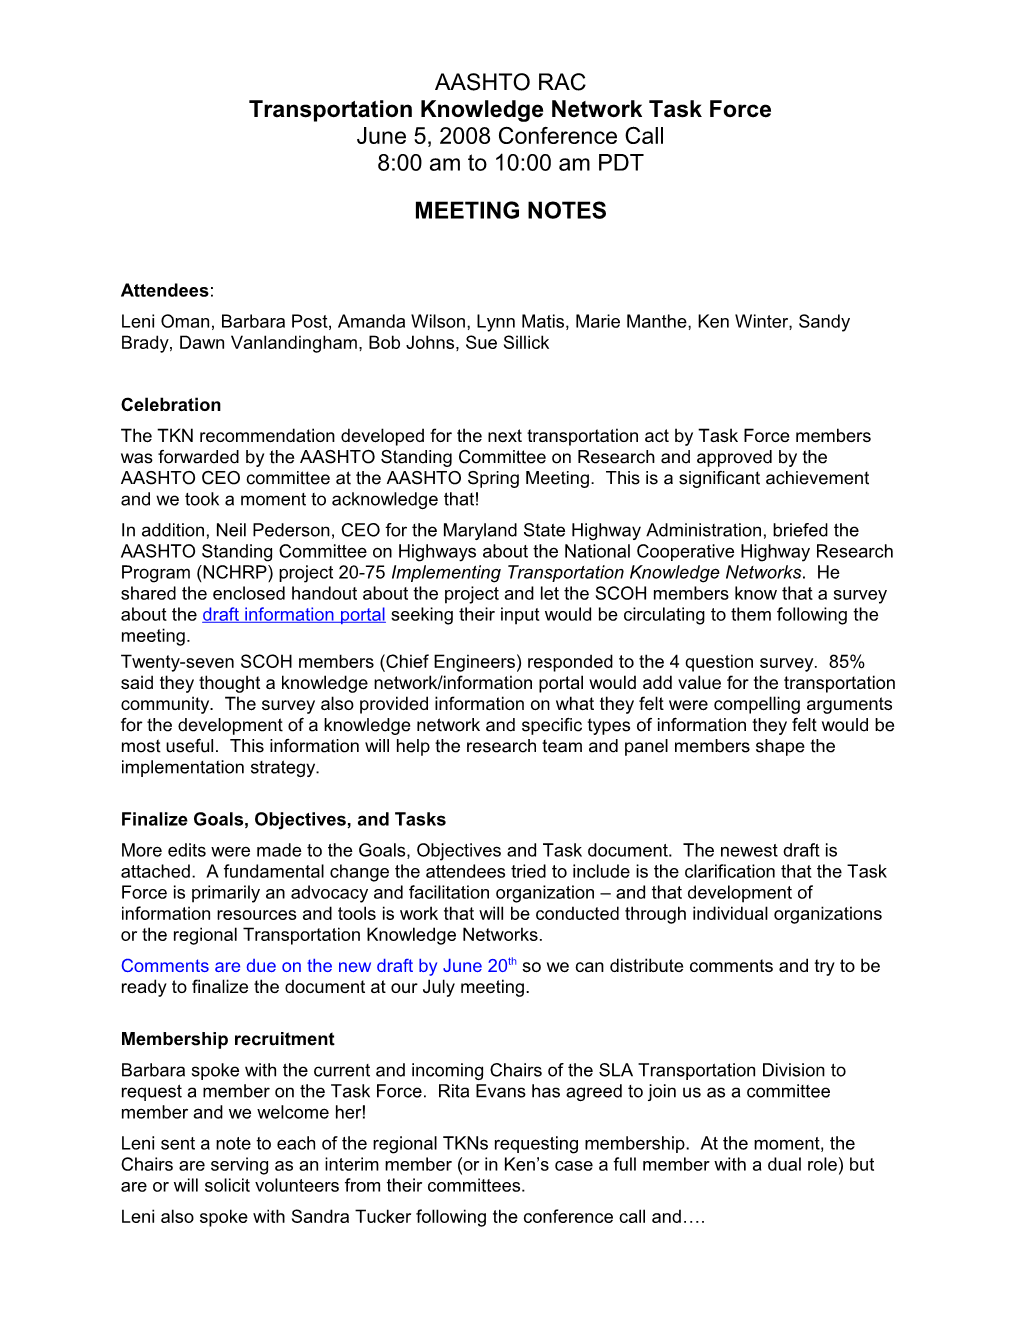 TKN Task Force Meeting Notes: June 5, 2008